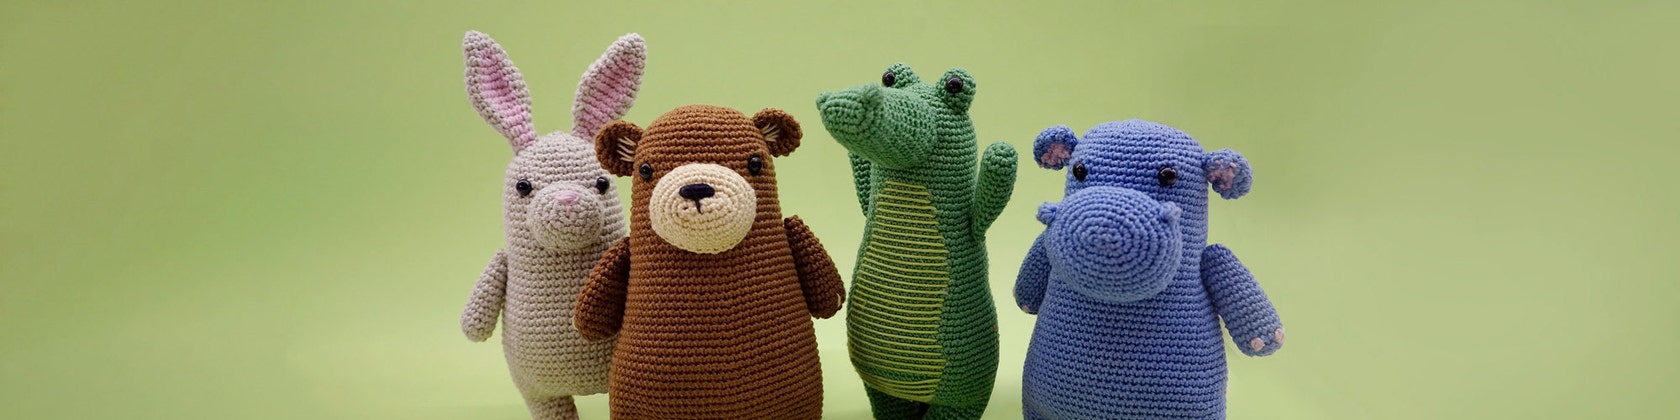 Beginner Learn to Crochet Kit Fox by the Woobles Easy Crochet